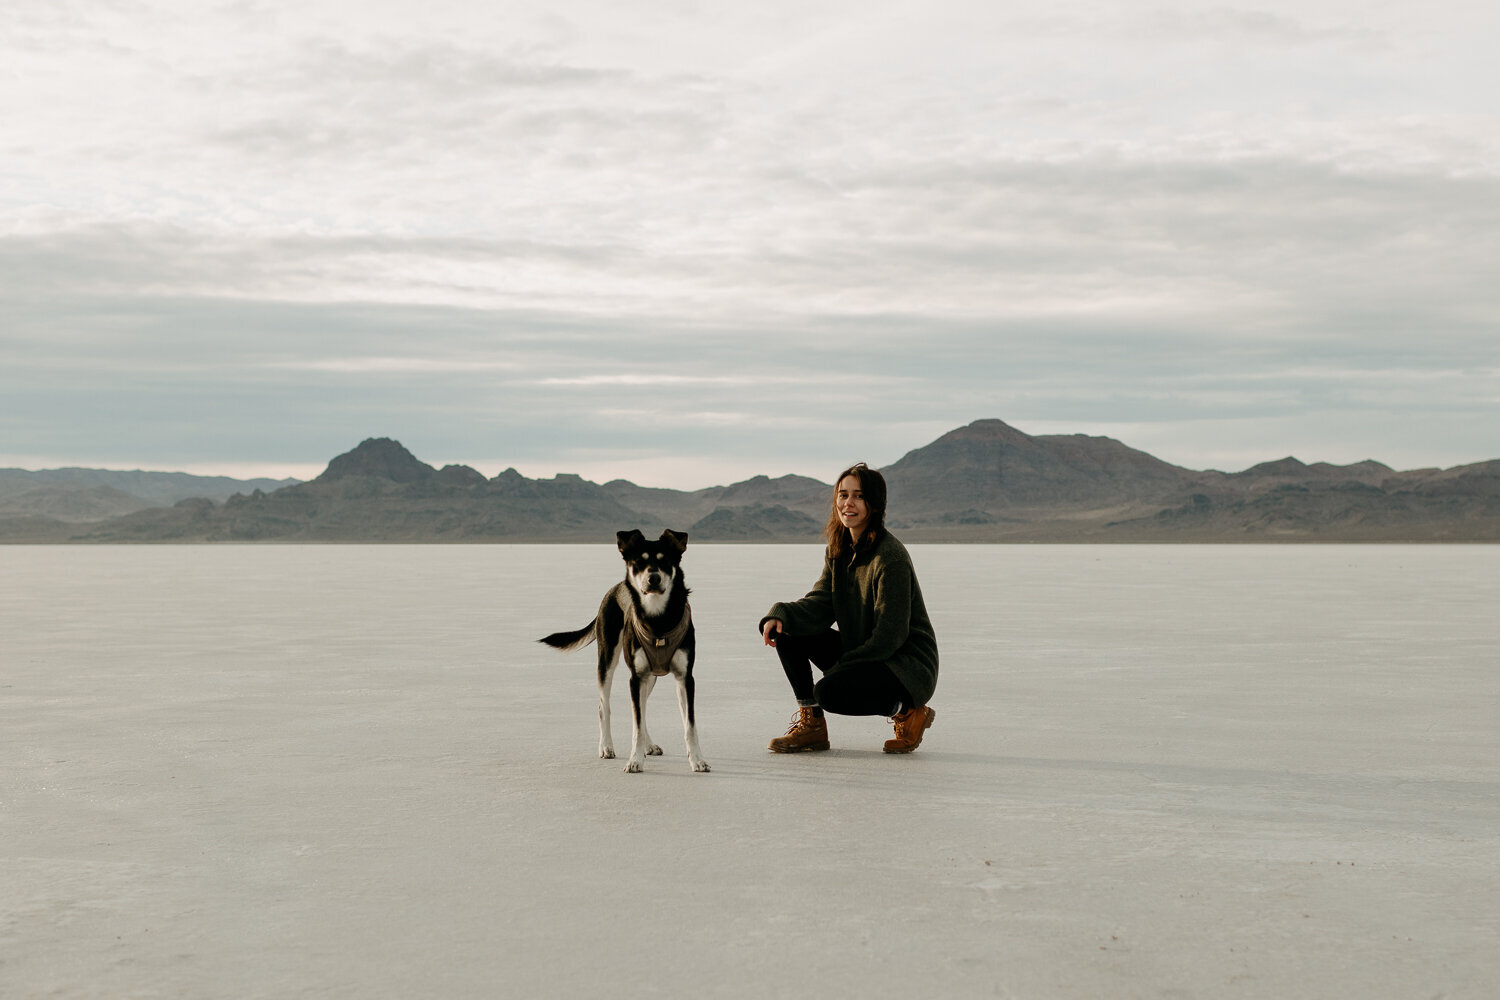 Destination wedding photographer posing at the Bonneville Salt Flats in Utah with her dog